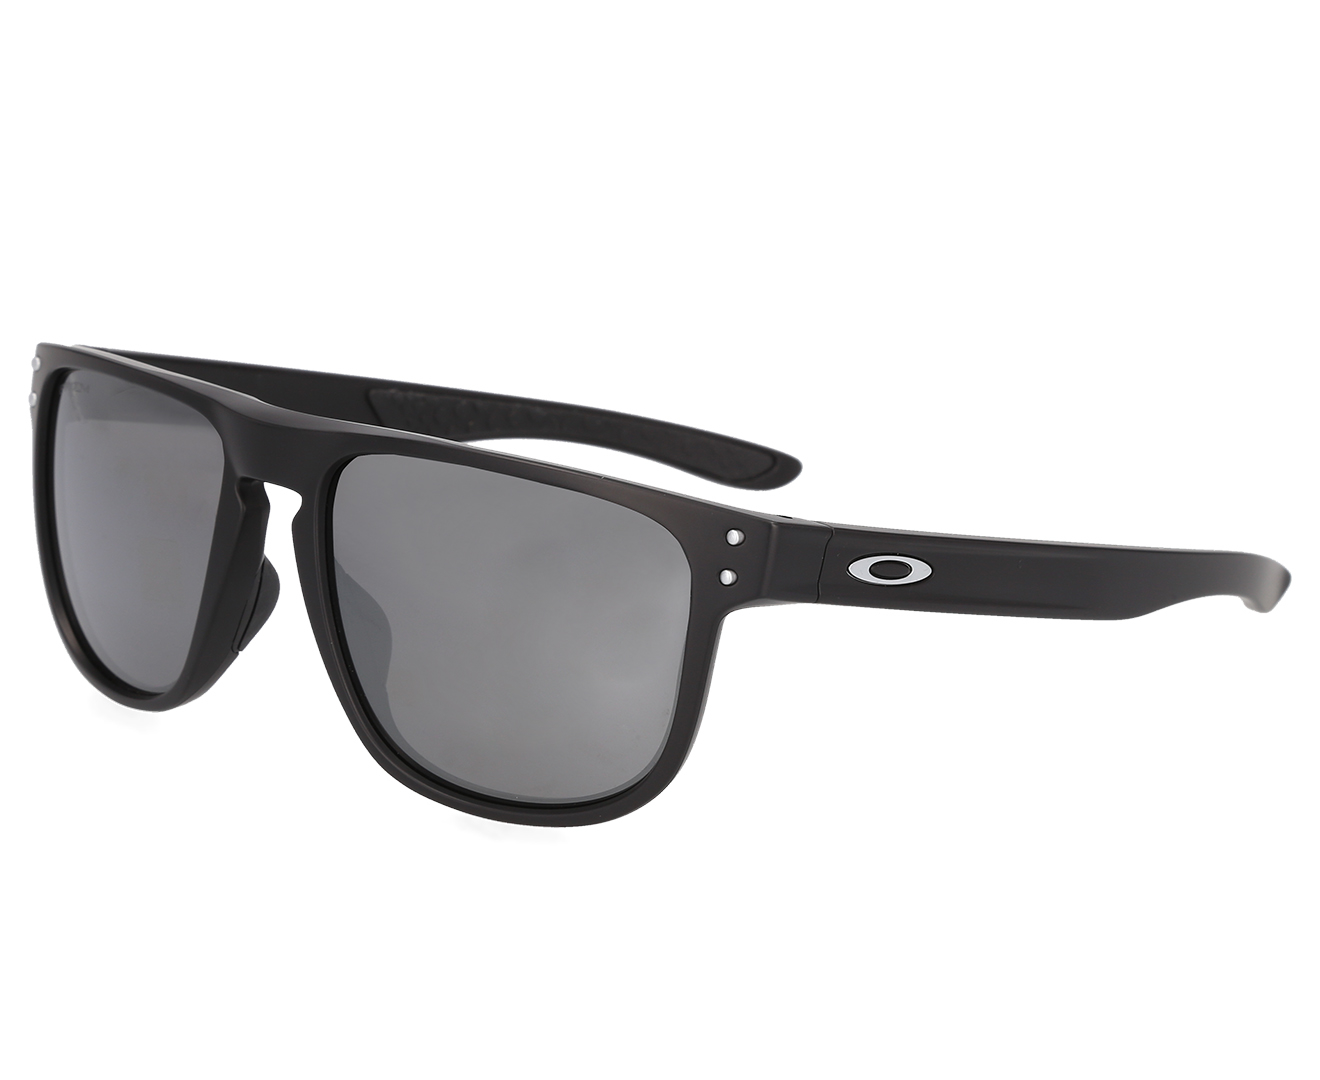 Oakley Holbrook Sunglasses - Matte Black/Prizm Black | Catch.com.au